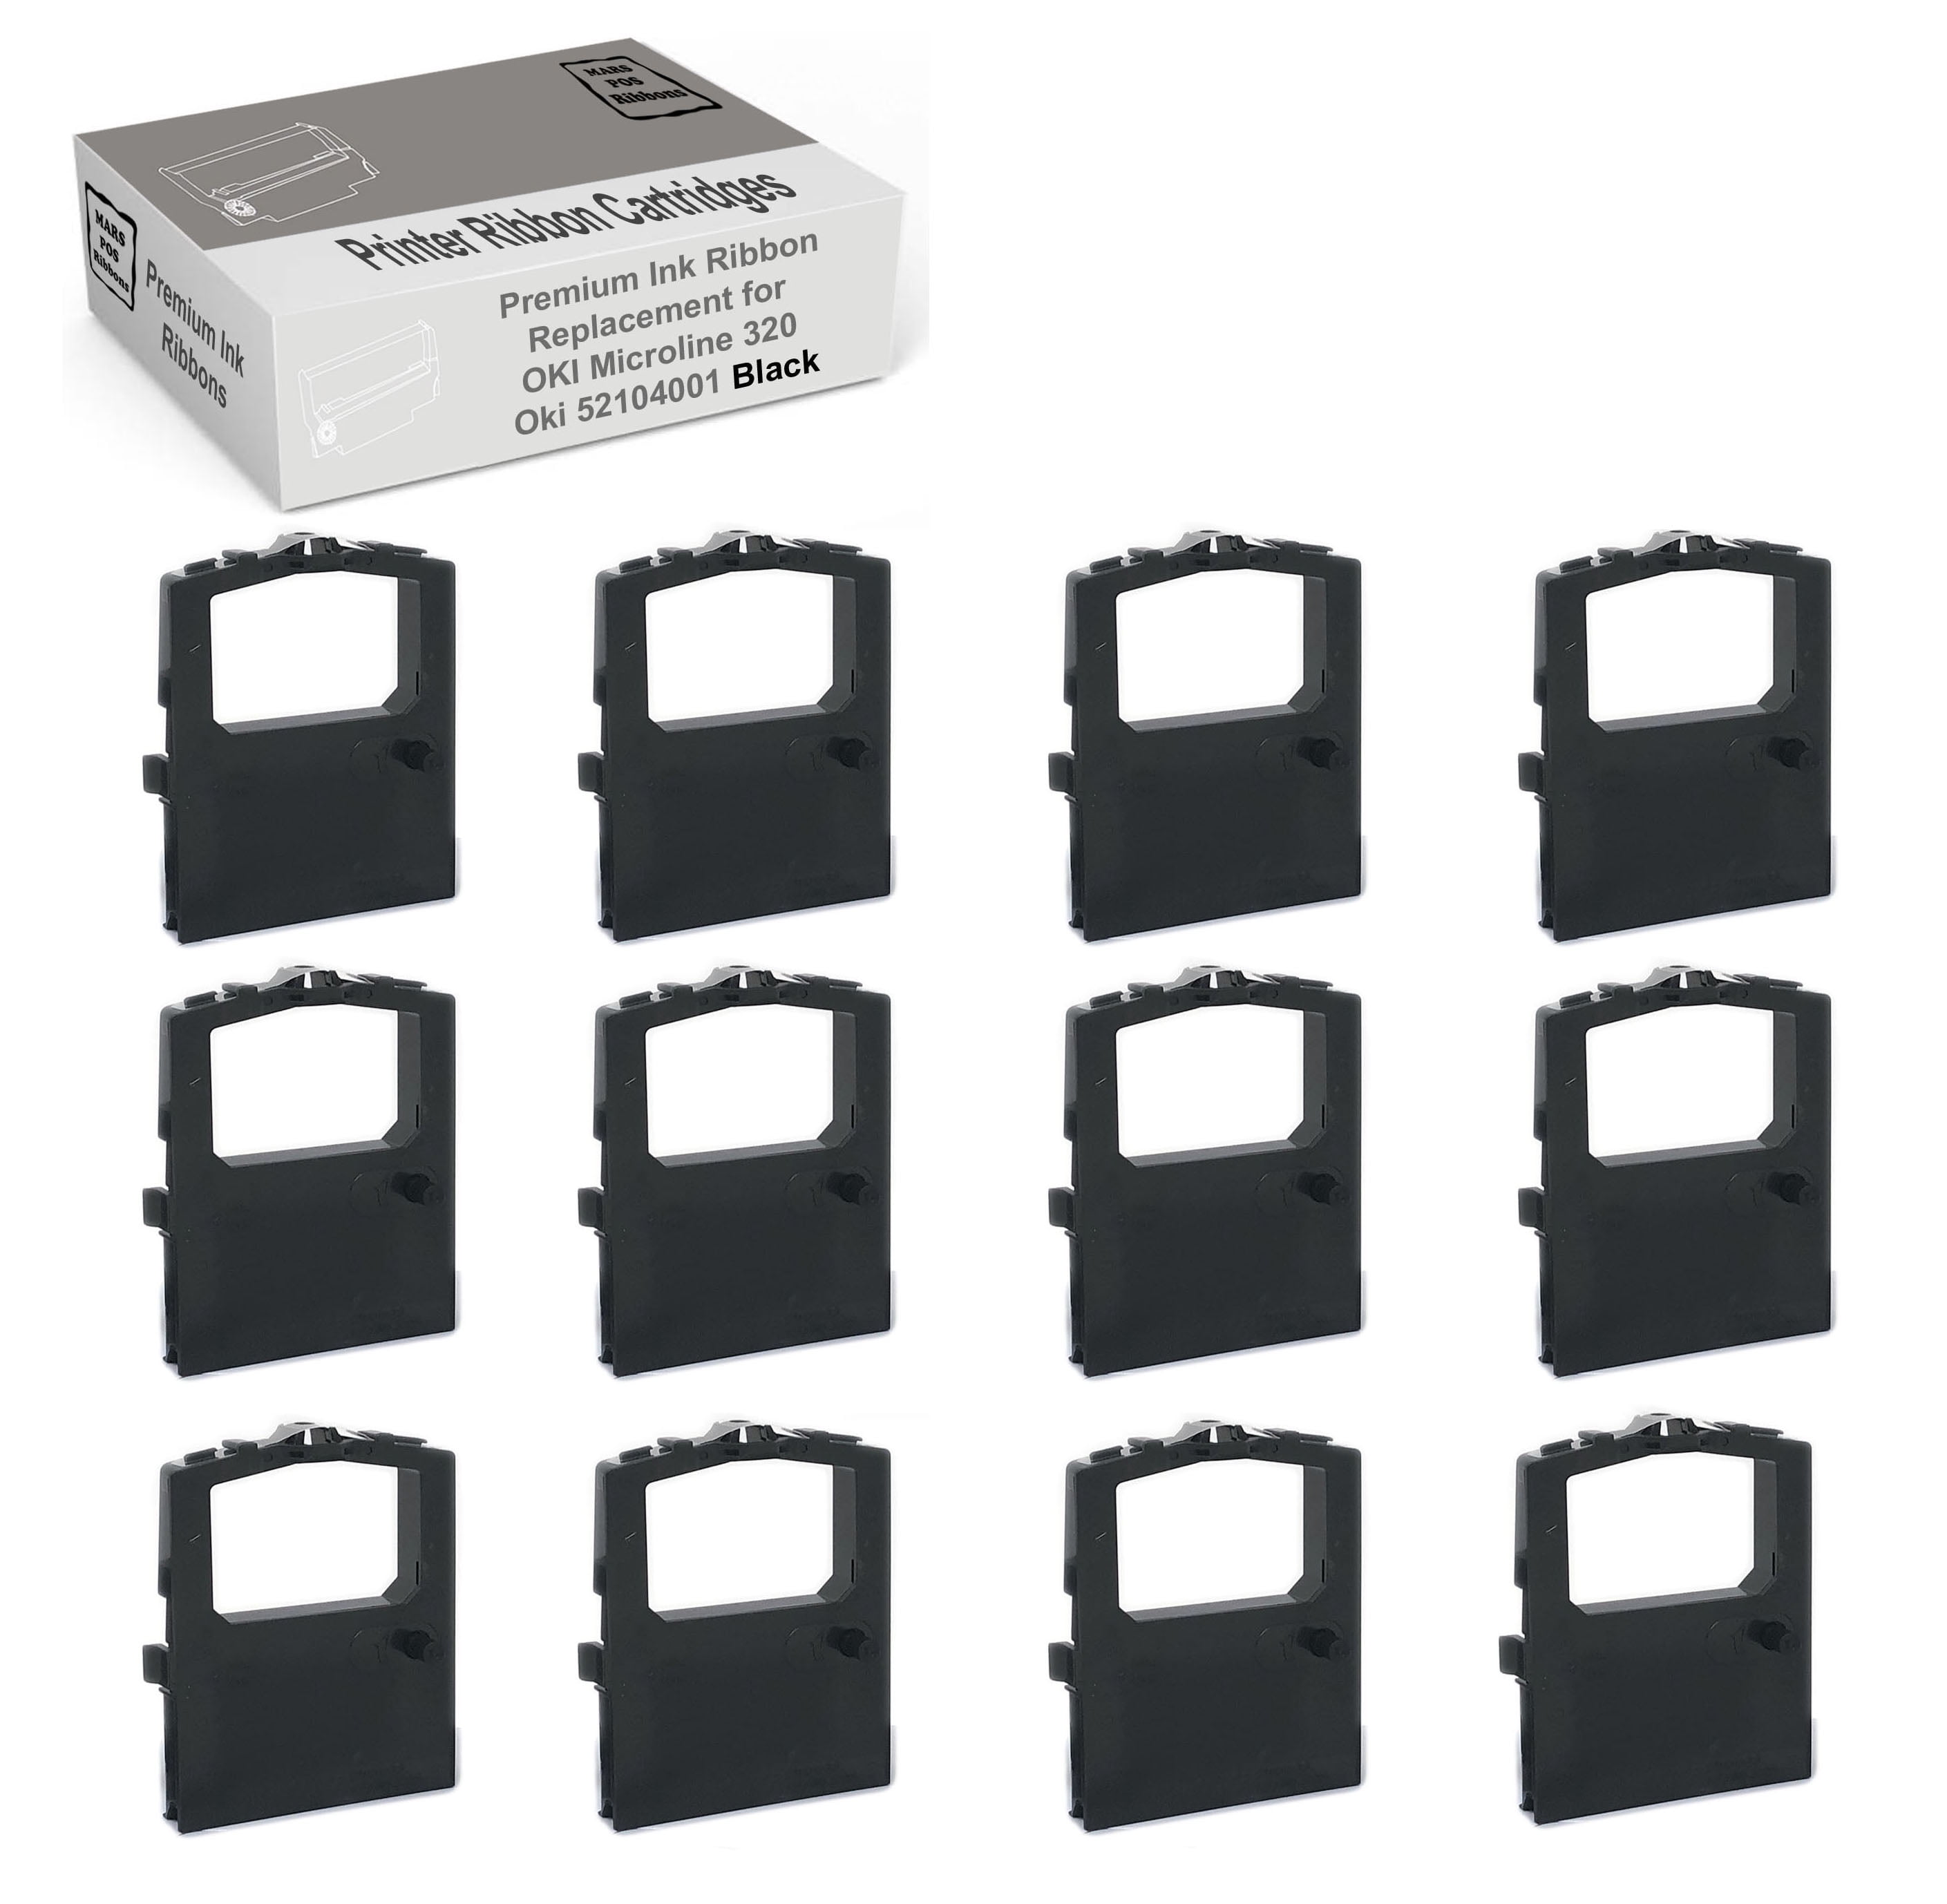 12 Pack Ink Ribbon Replacement for Okidata 320 420 Turbo 52102001 52104001 12-pk, Black 